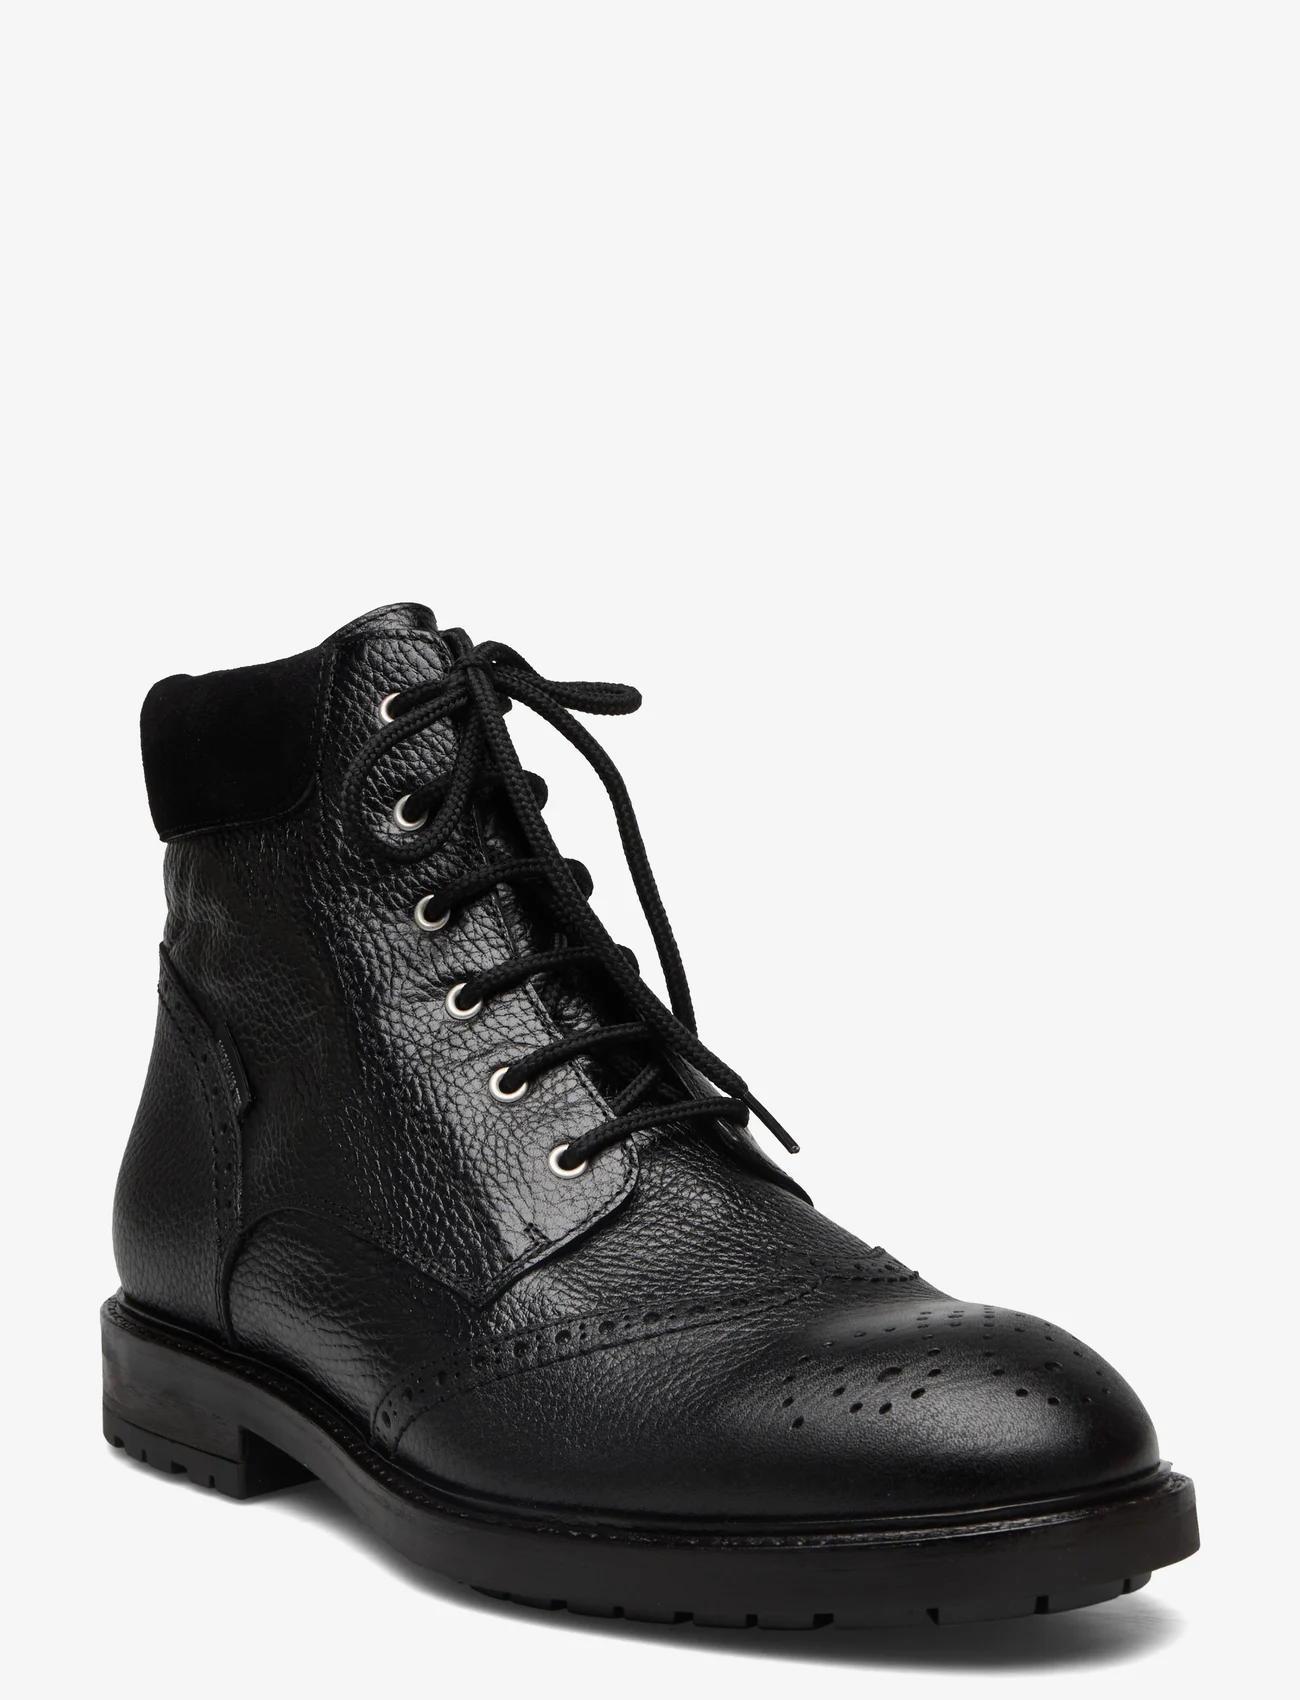 ANGULUS - Shoes - flat - with lace - lace ups - 2504/1163 black/black - 0